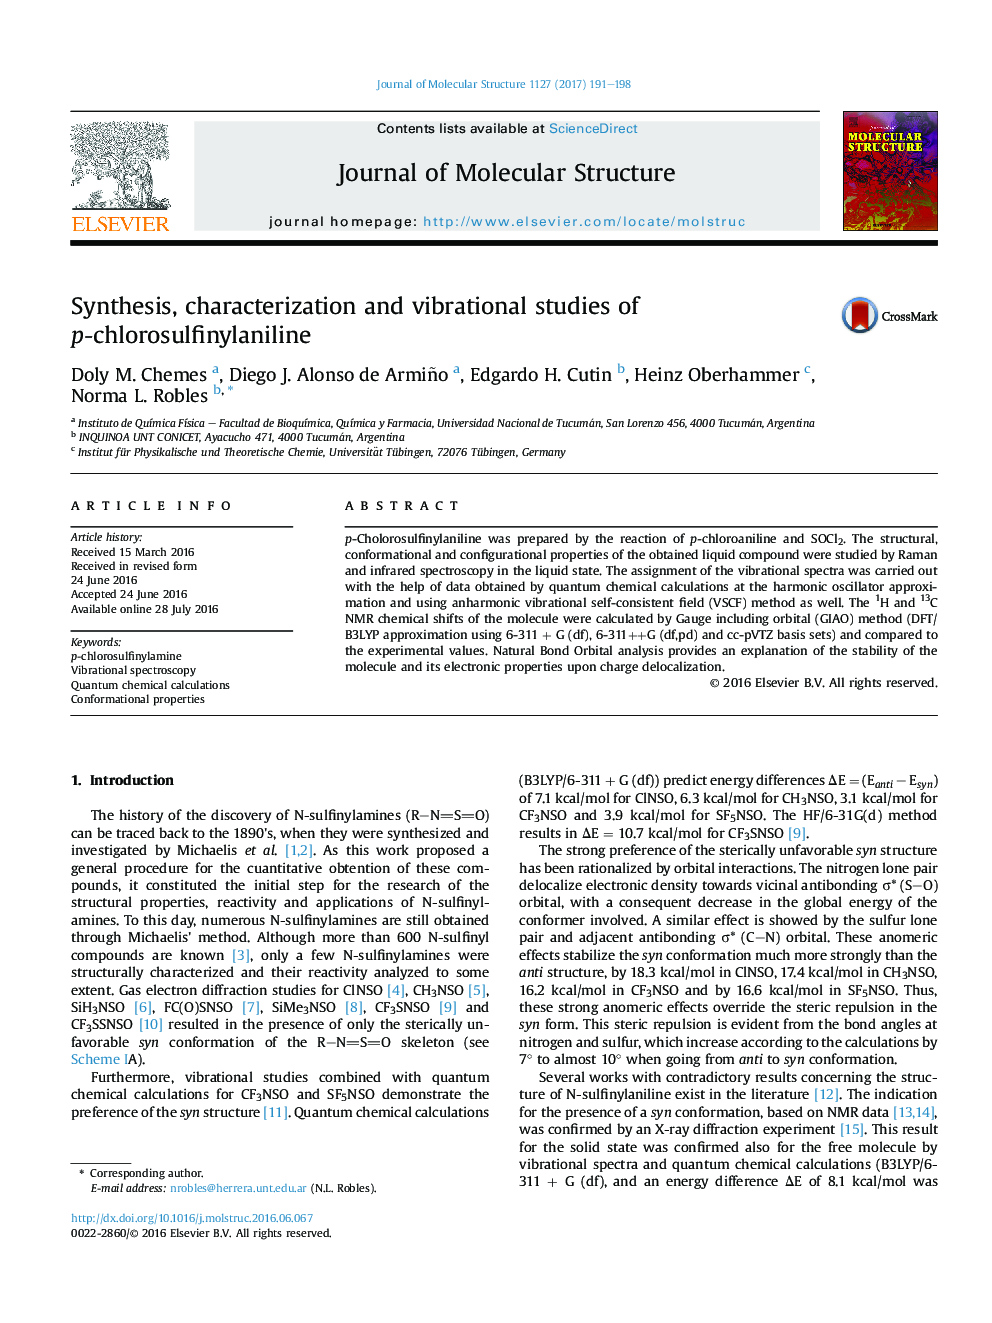 Synthesis, characterization and vibrational studies of p-chlorosulfinylaniline